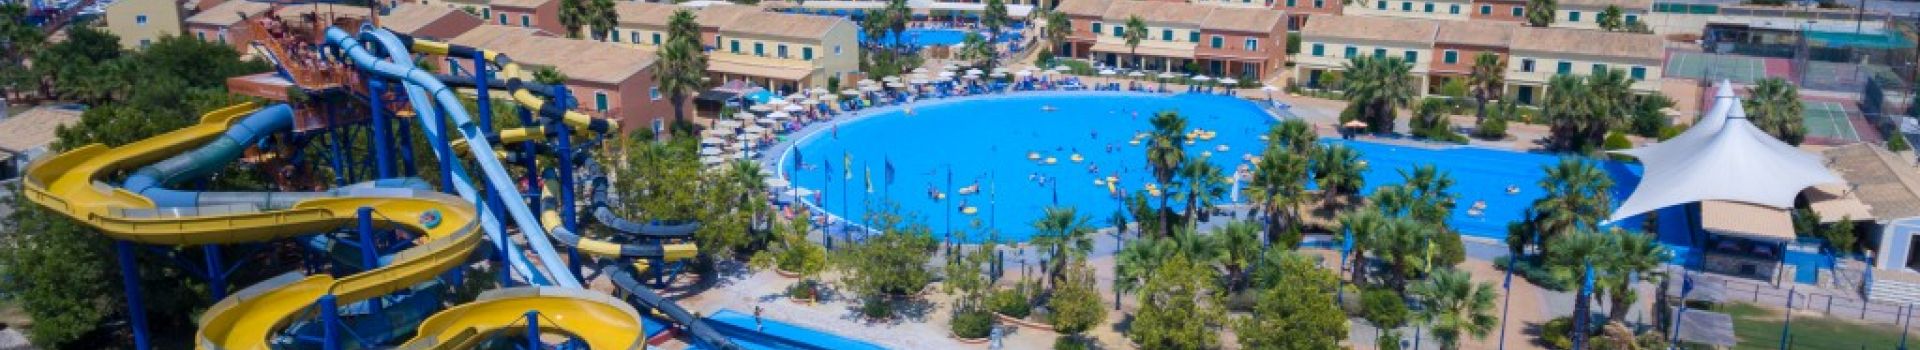 5 share offers Aqualand Resort